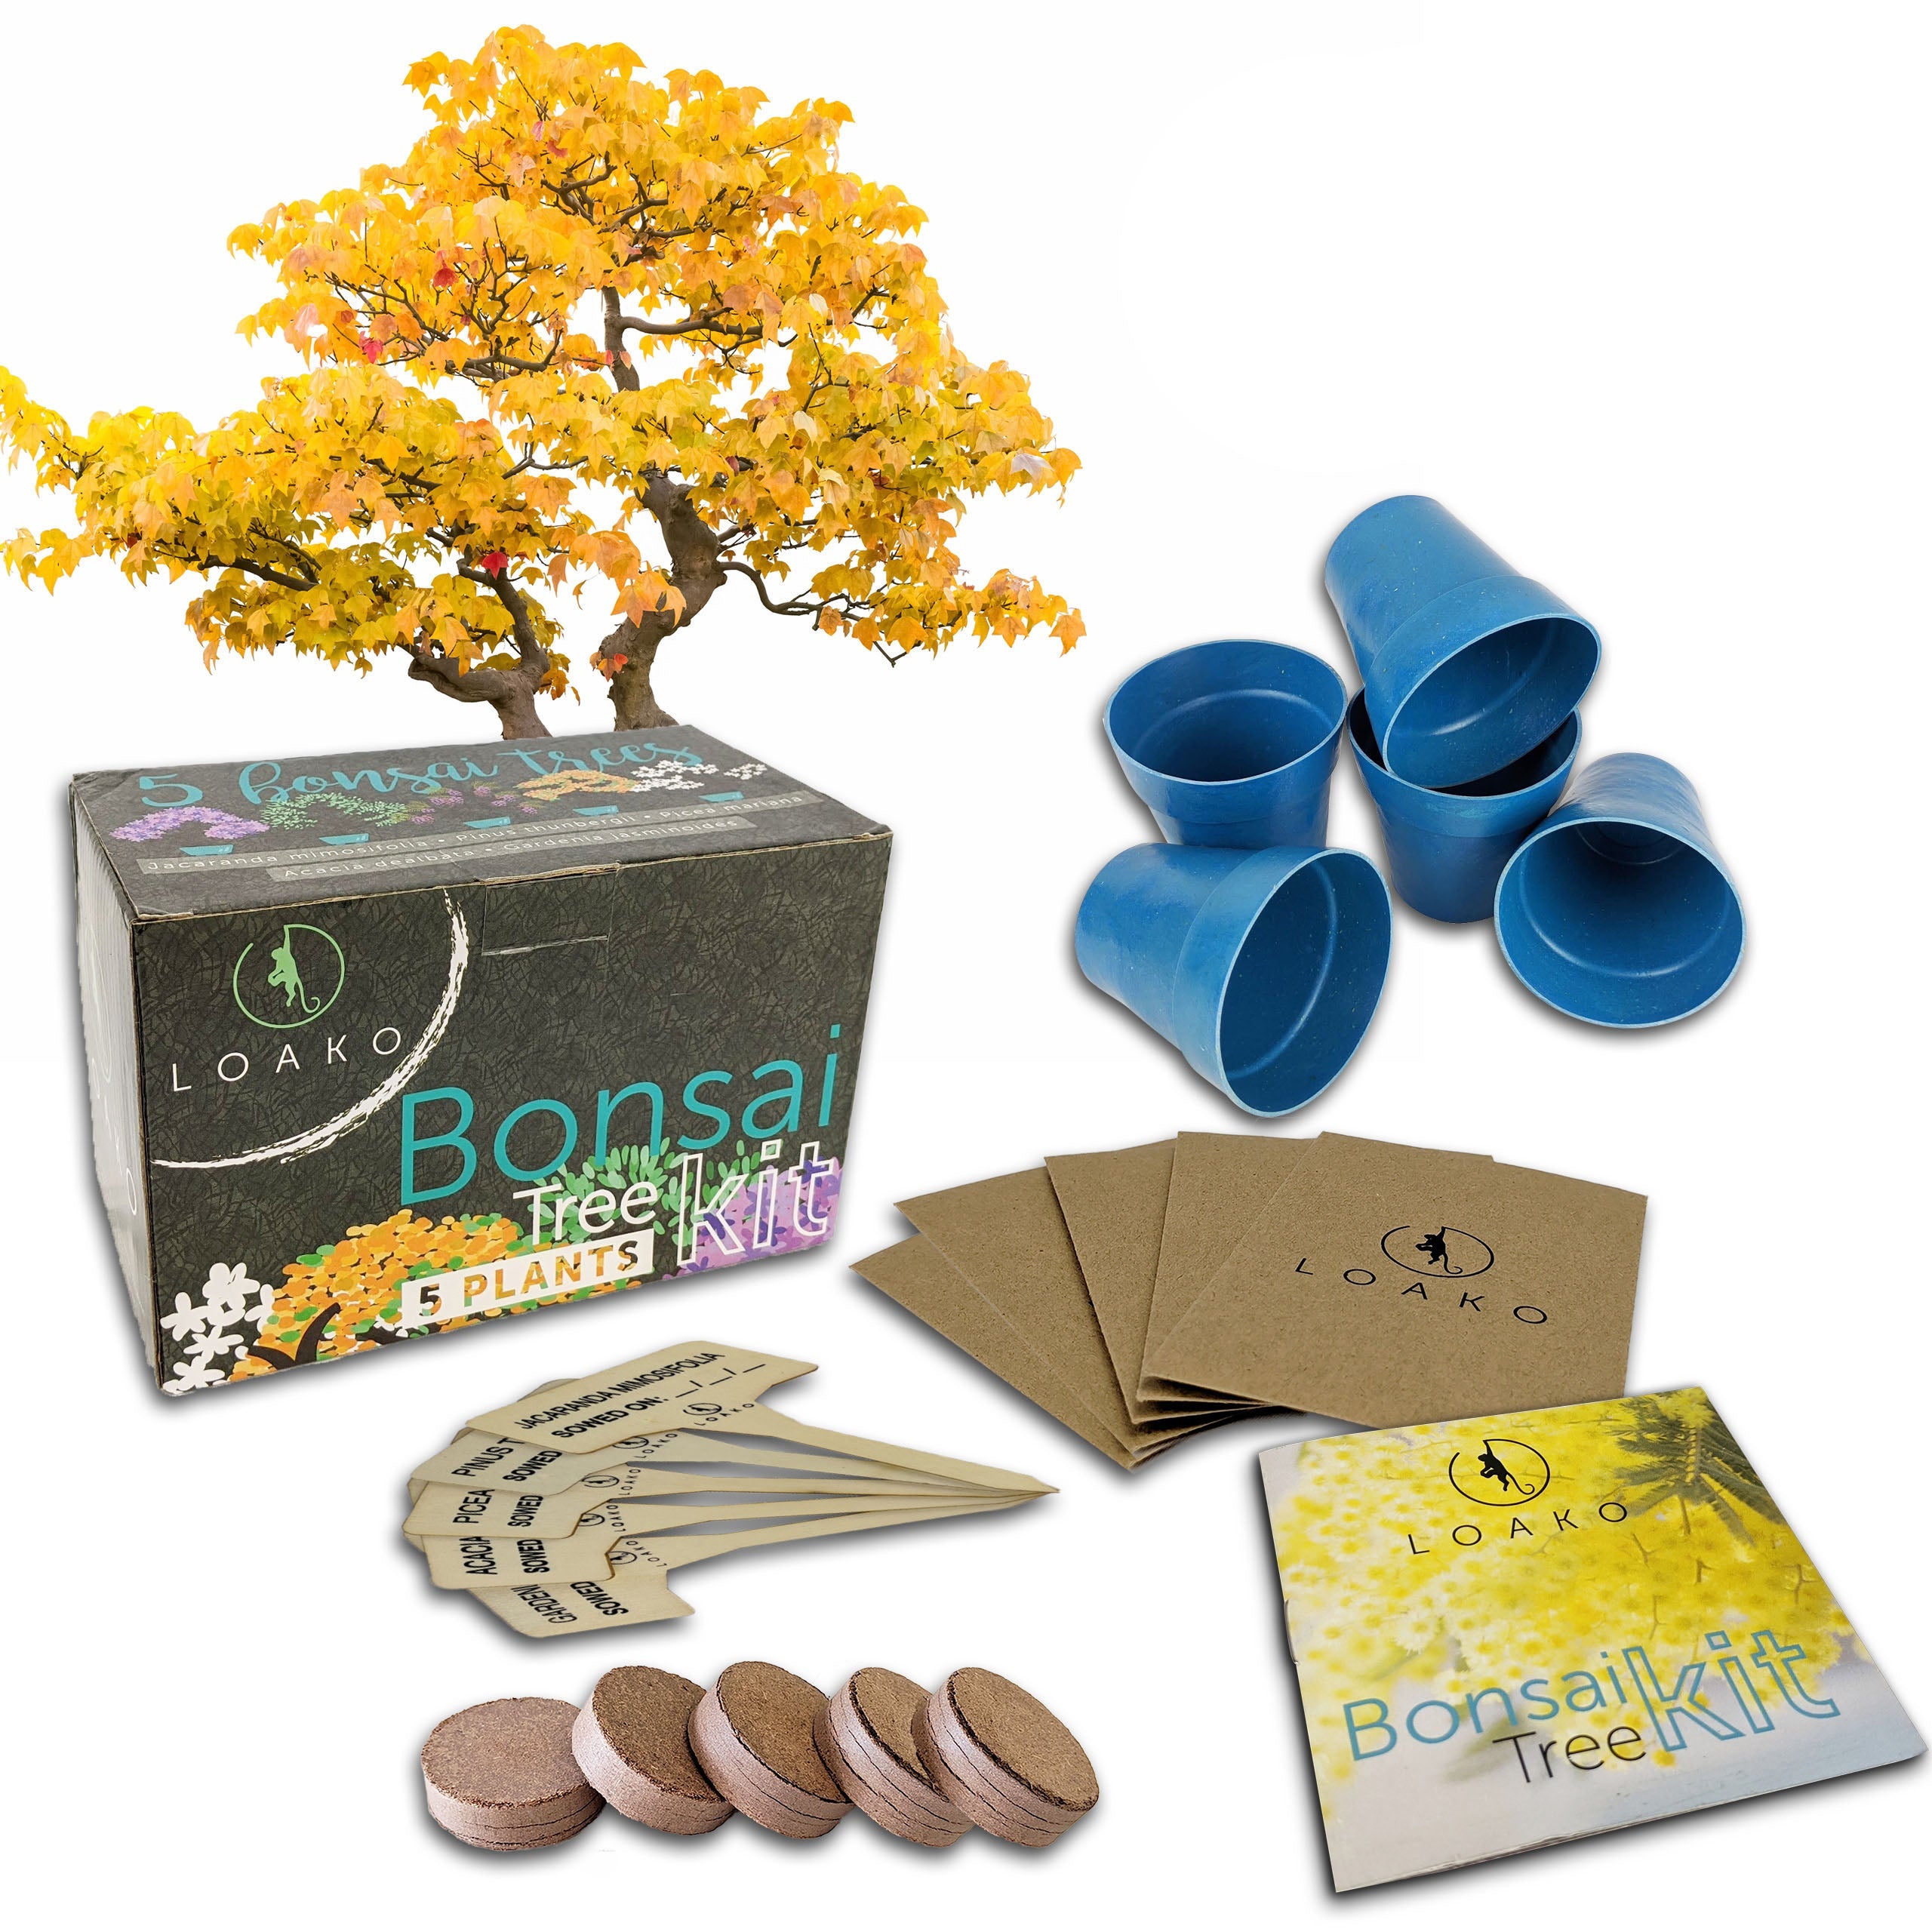 Regular Bonsai Tree Kit